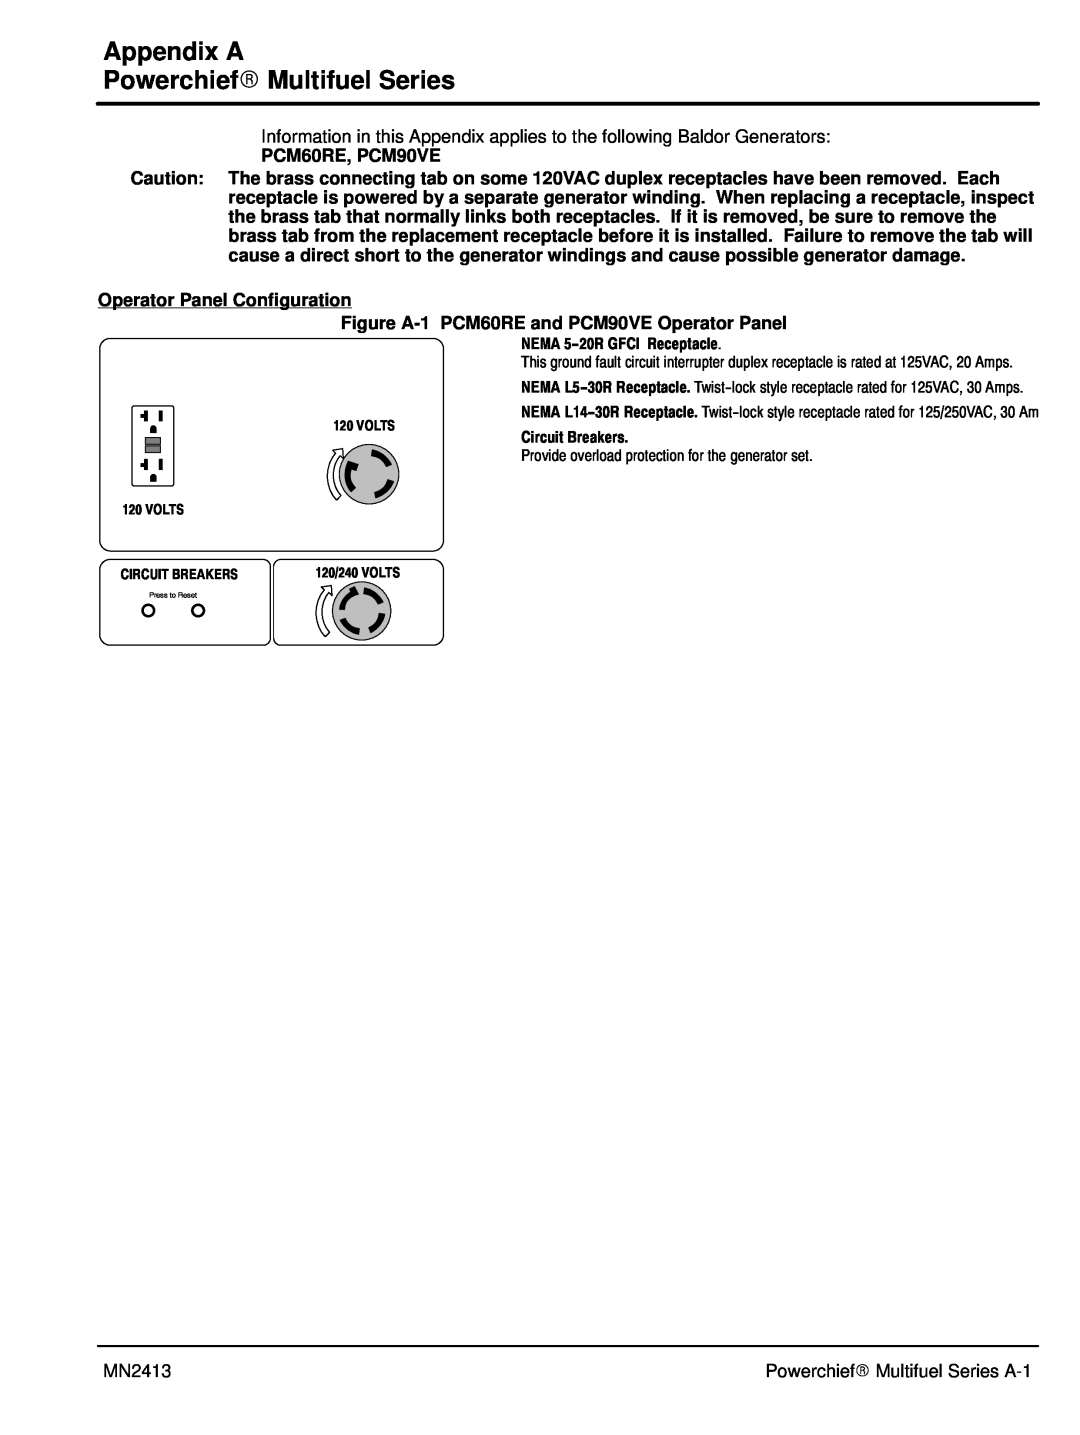 Baldor Series PC Mutlifuel manual Appendix A PowerchiefR Multifuel Series, NEMA 5-20R GFCI Receptacle 